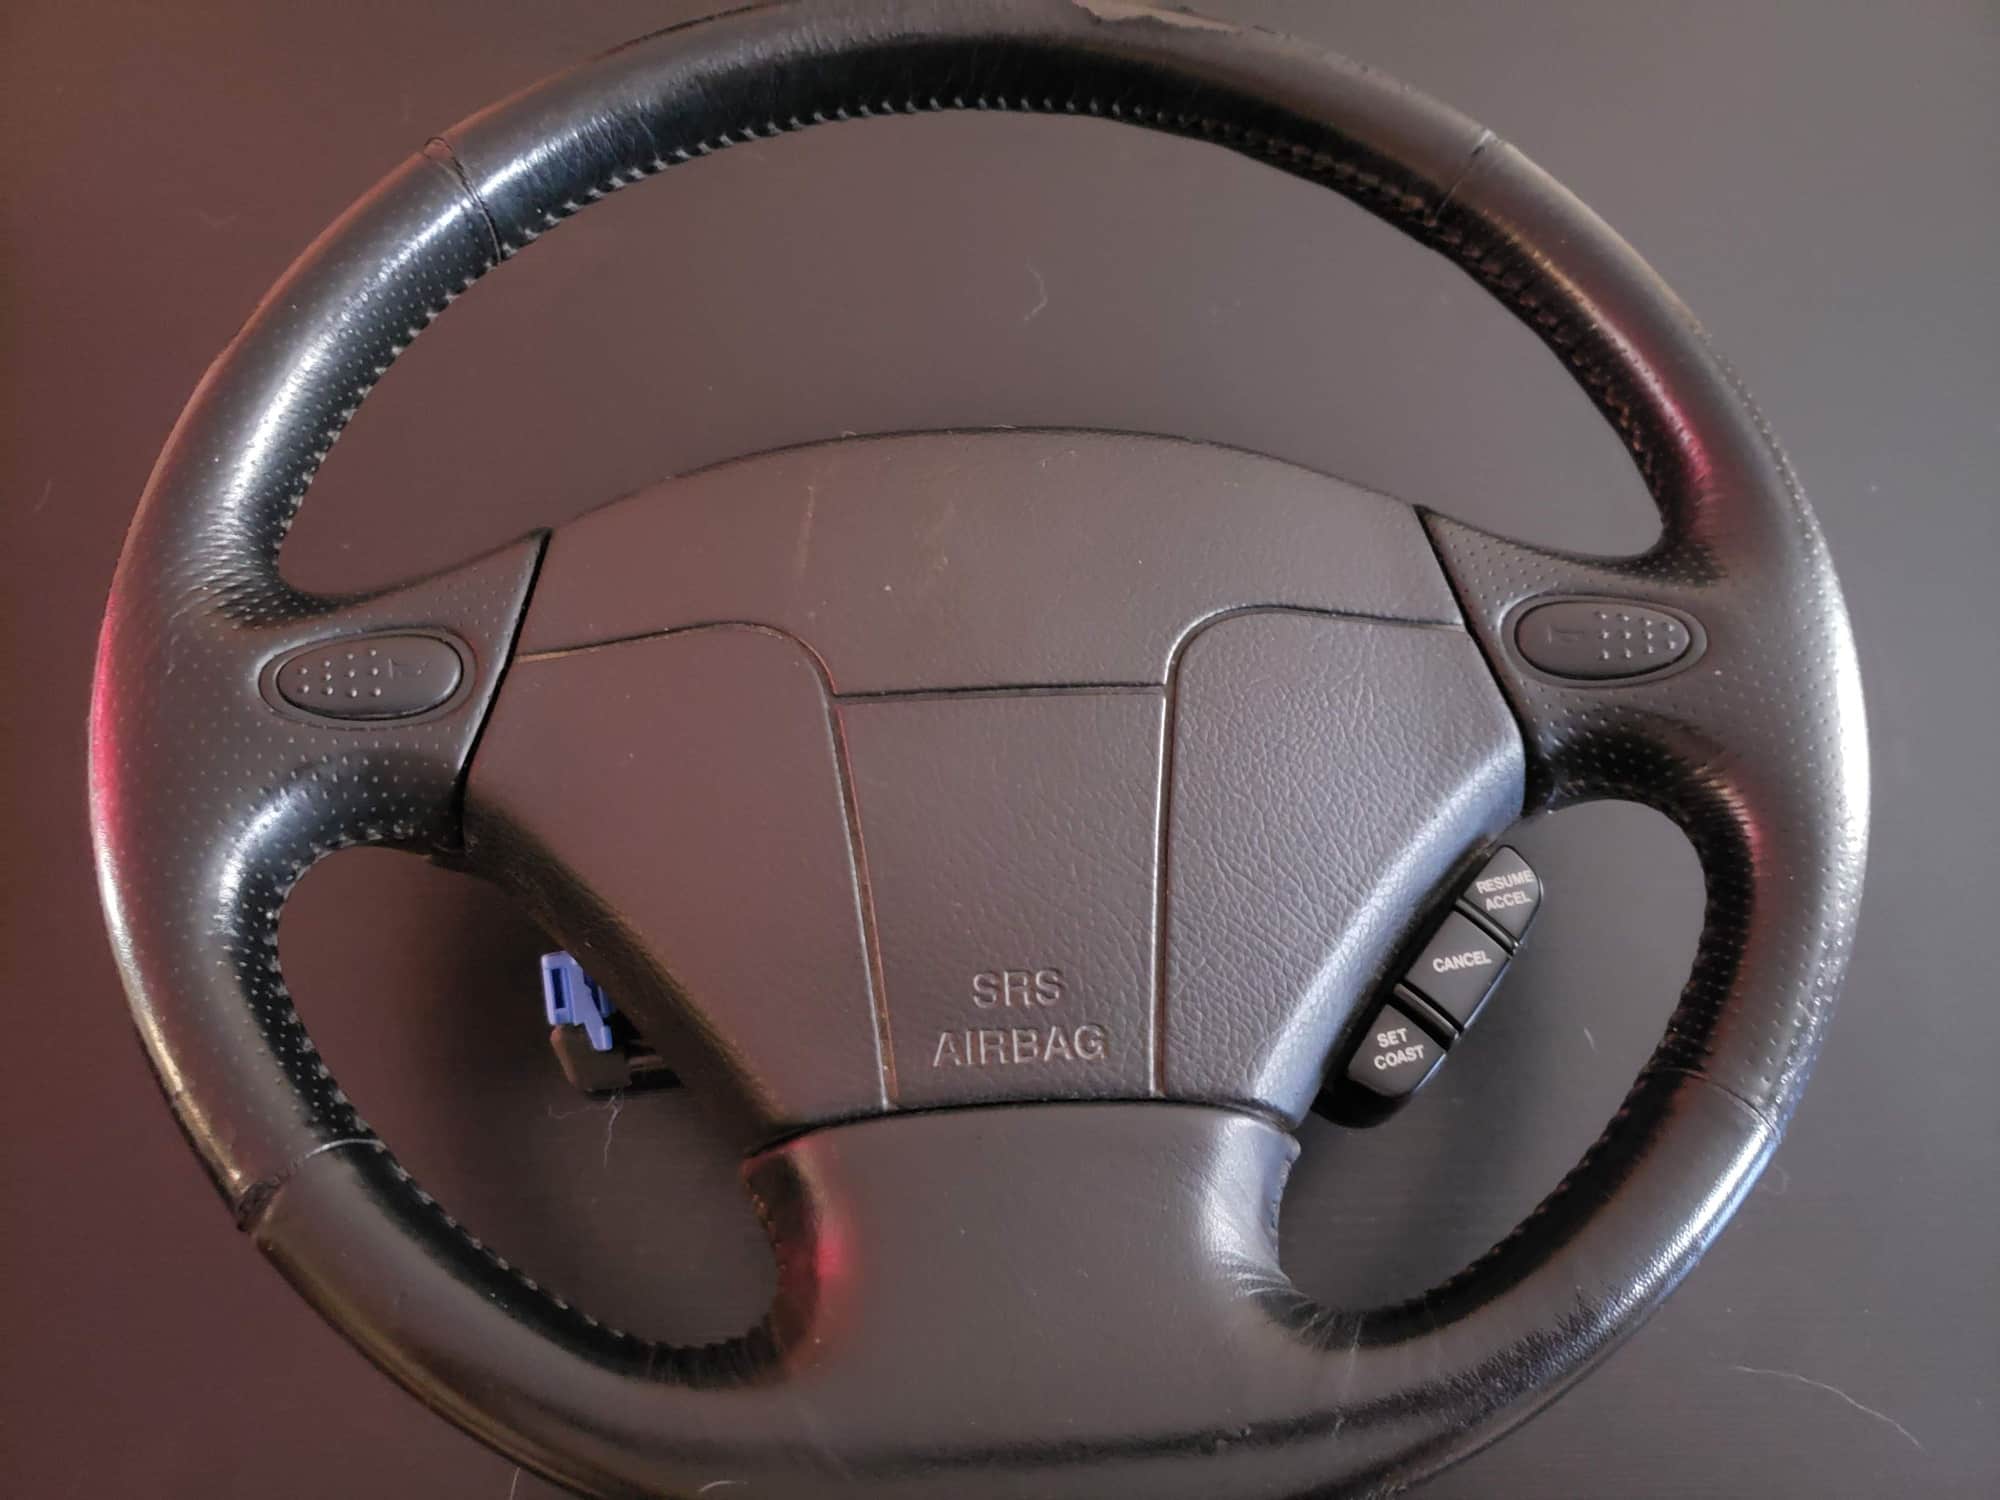 Interior/Upholstery - 1994 RX7 steering wheel - Used - 1994 Mazda RX-7 - Houston, TX 77057, United States